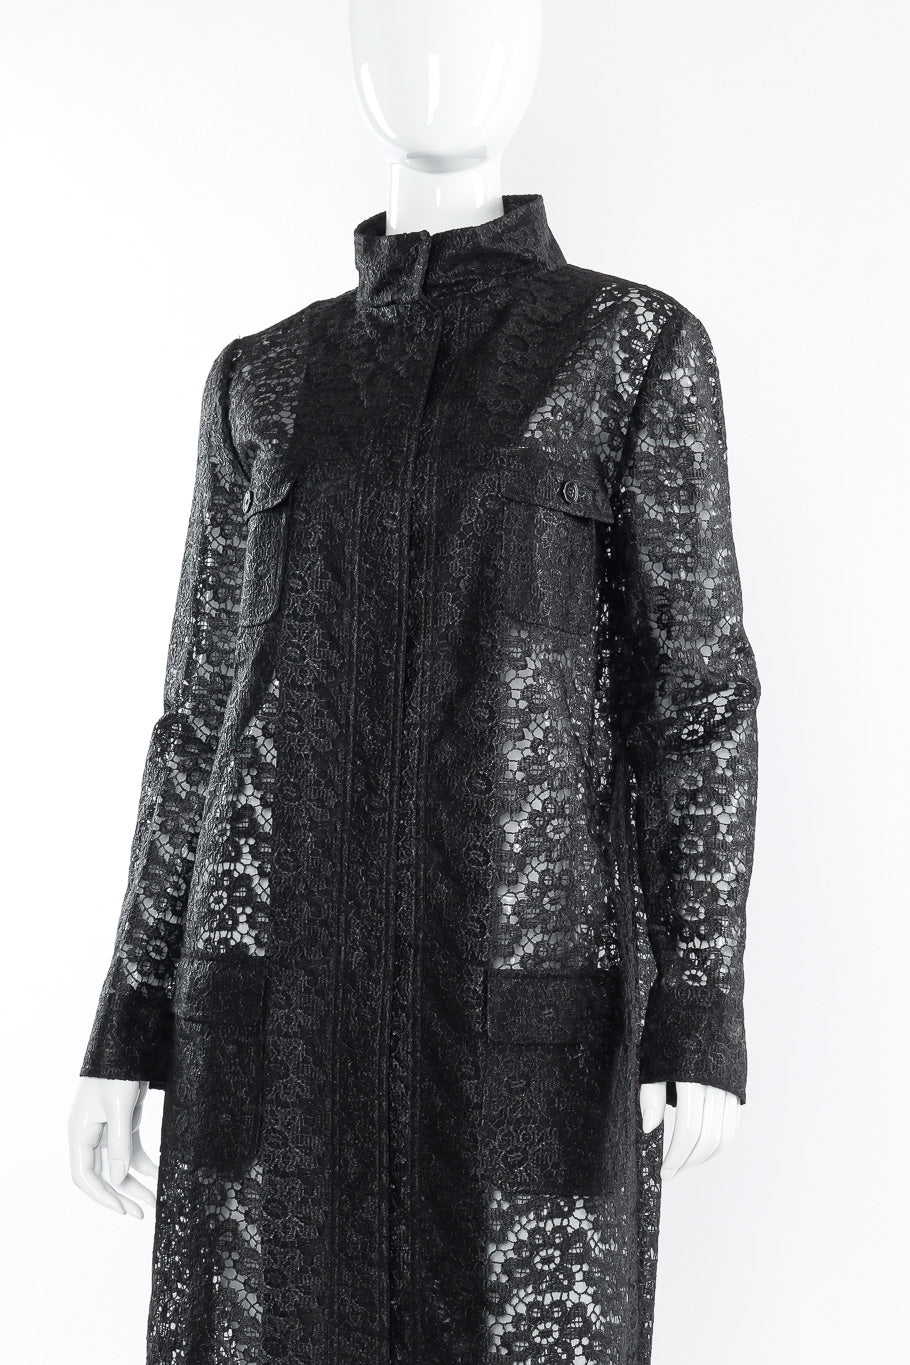 Dolce & Gabbana lace pattern coat on mannequin @recessla